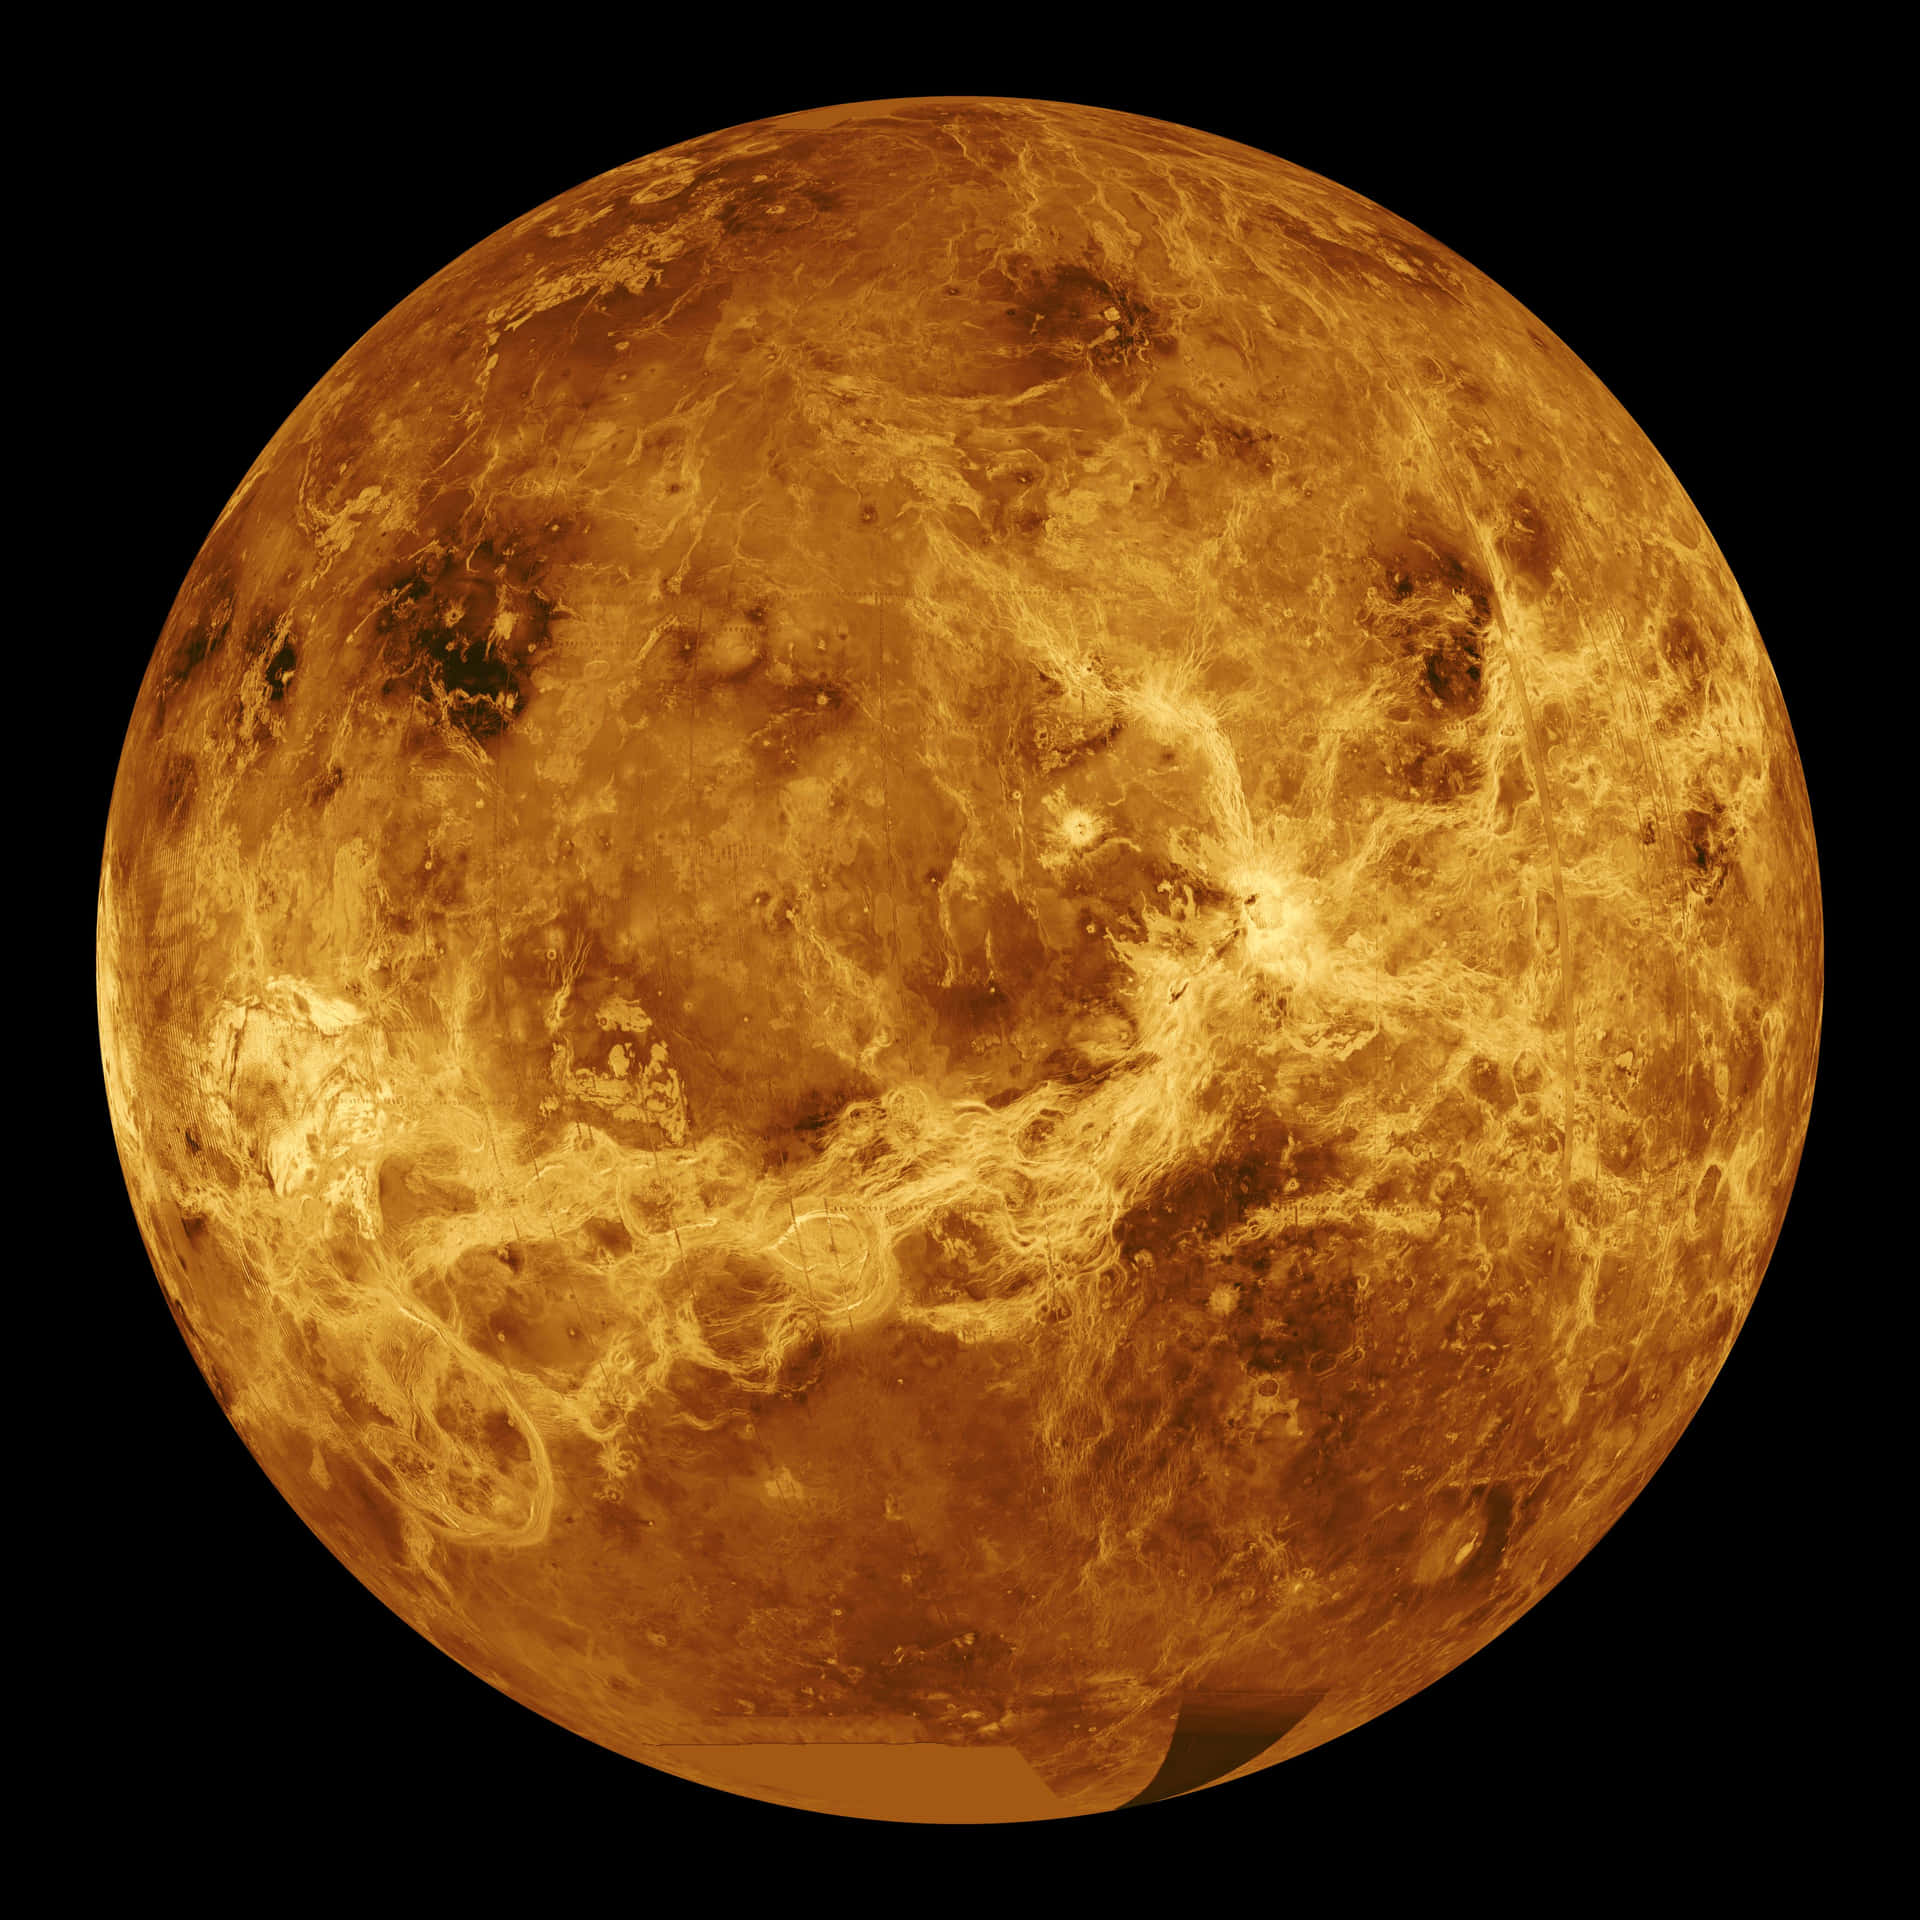 Caption: The Majestic Planet Venus Illuminated Against The Dark Expanse Of Space